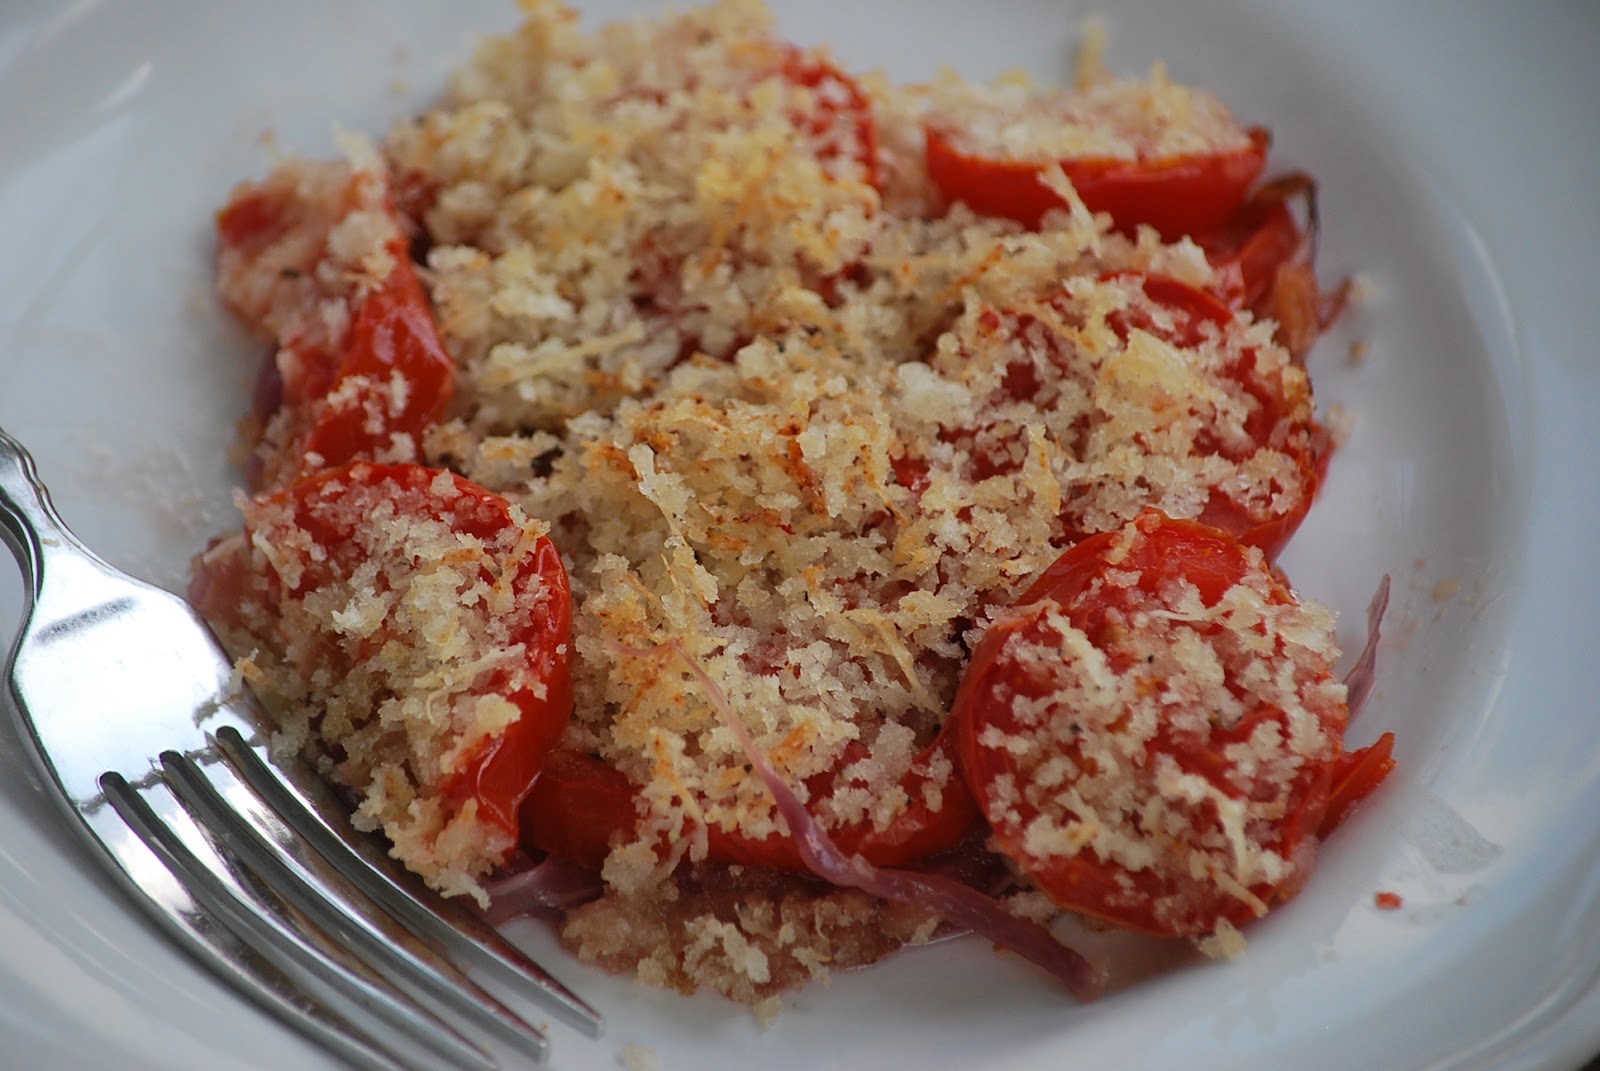 My story in recipes: Tomato Gratin